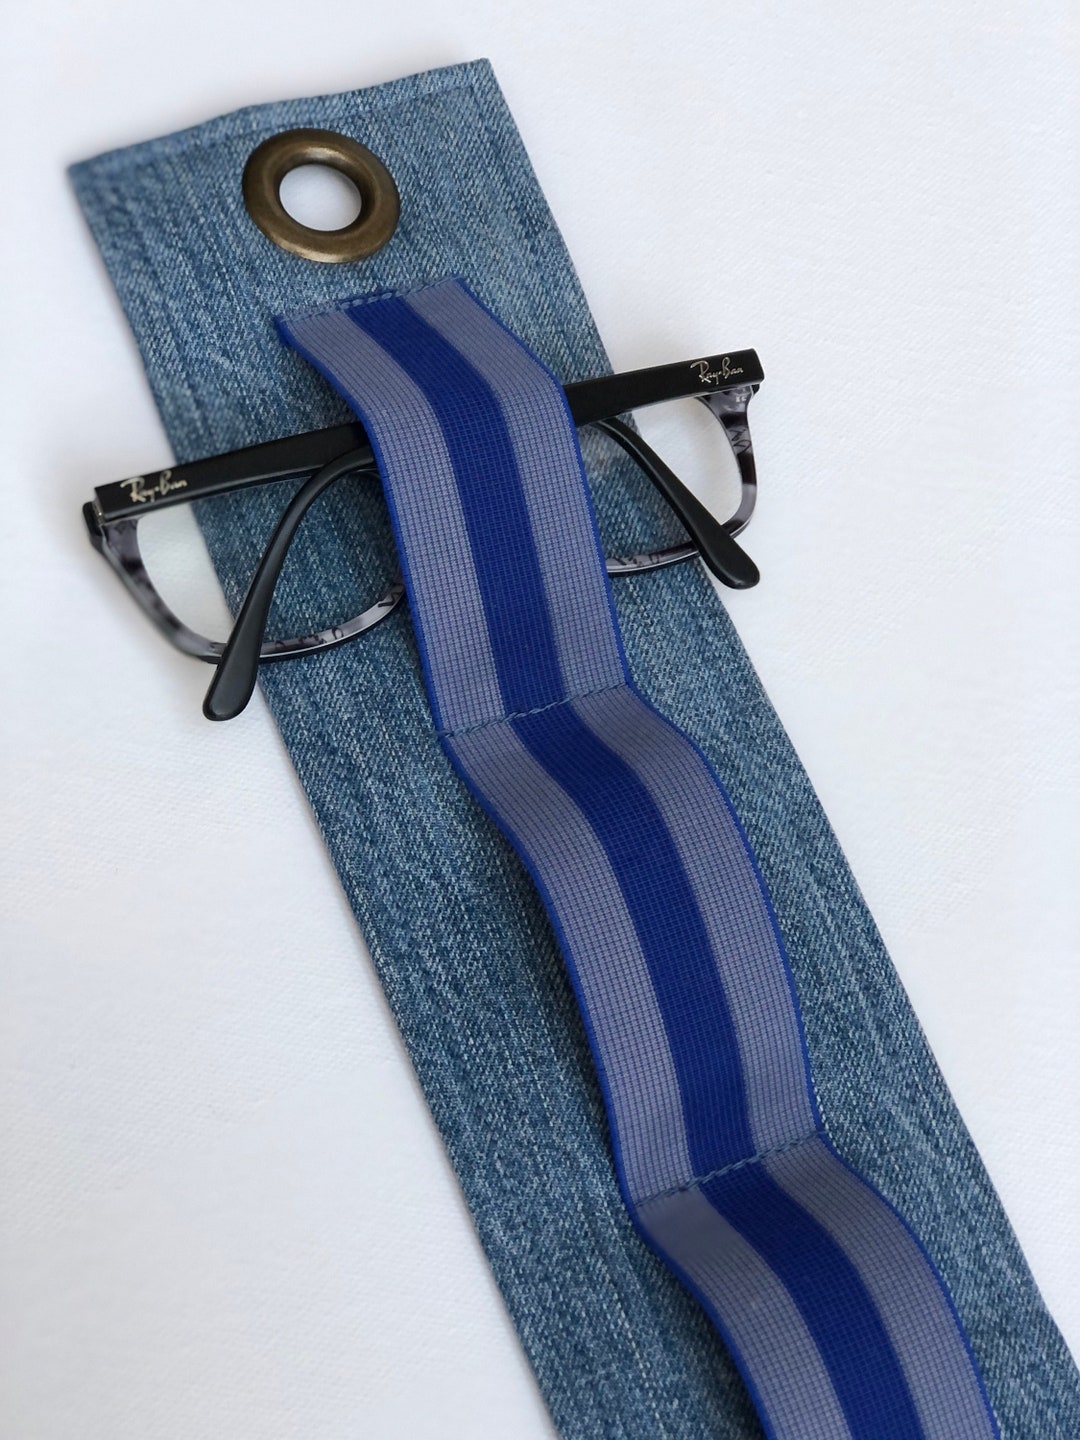 Brillenhalter aus Jeans zum anbringen an der Wand, Stoff, Gummi, - .de